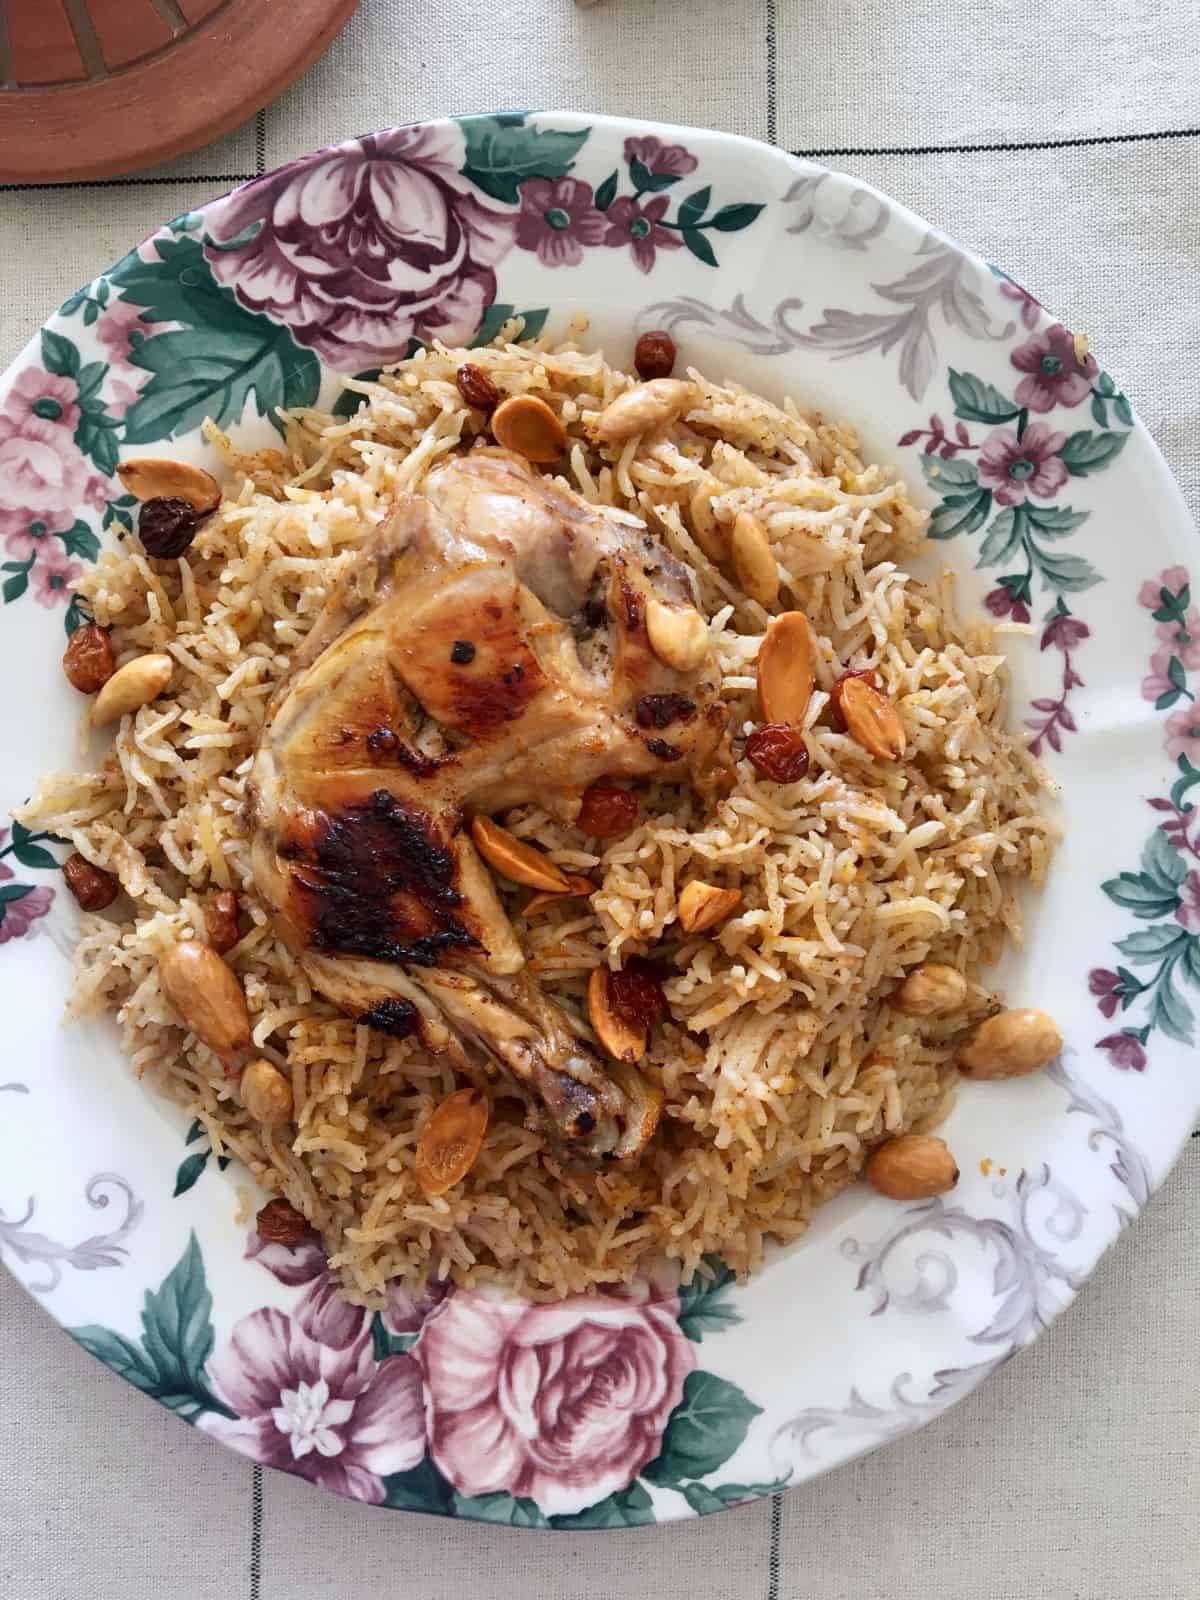 Chicken kabsah served in a plate.